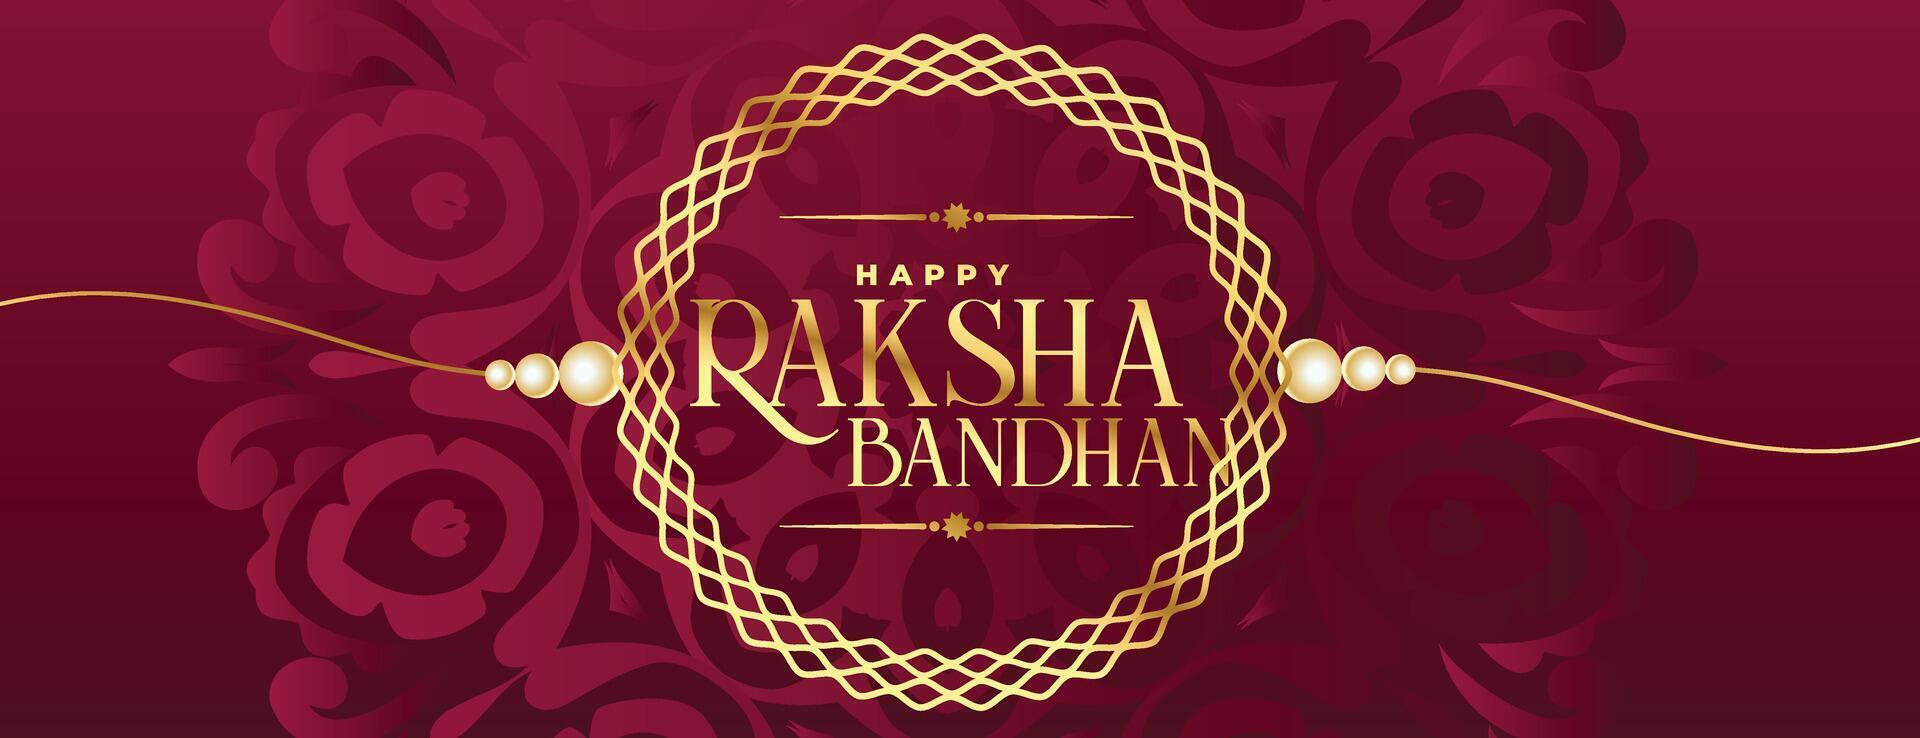 mooi raksha bandhan festival achtergrond met rakhi ontwerp vector